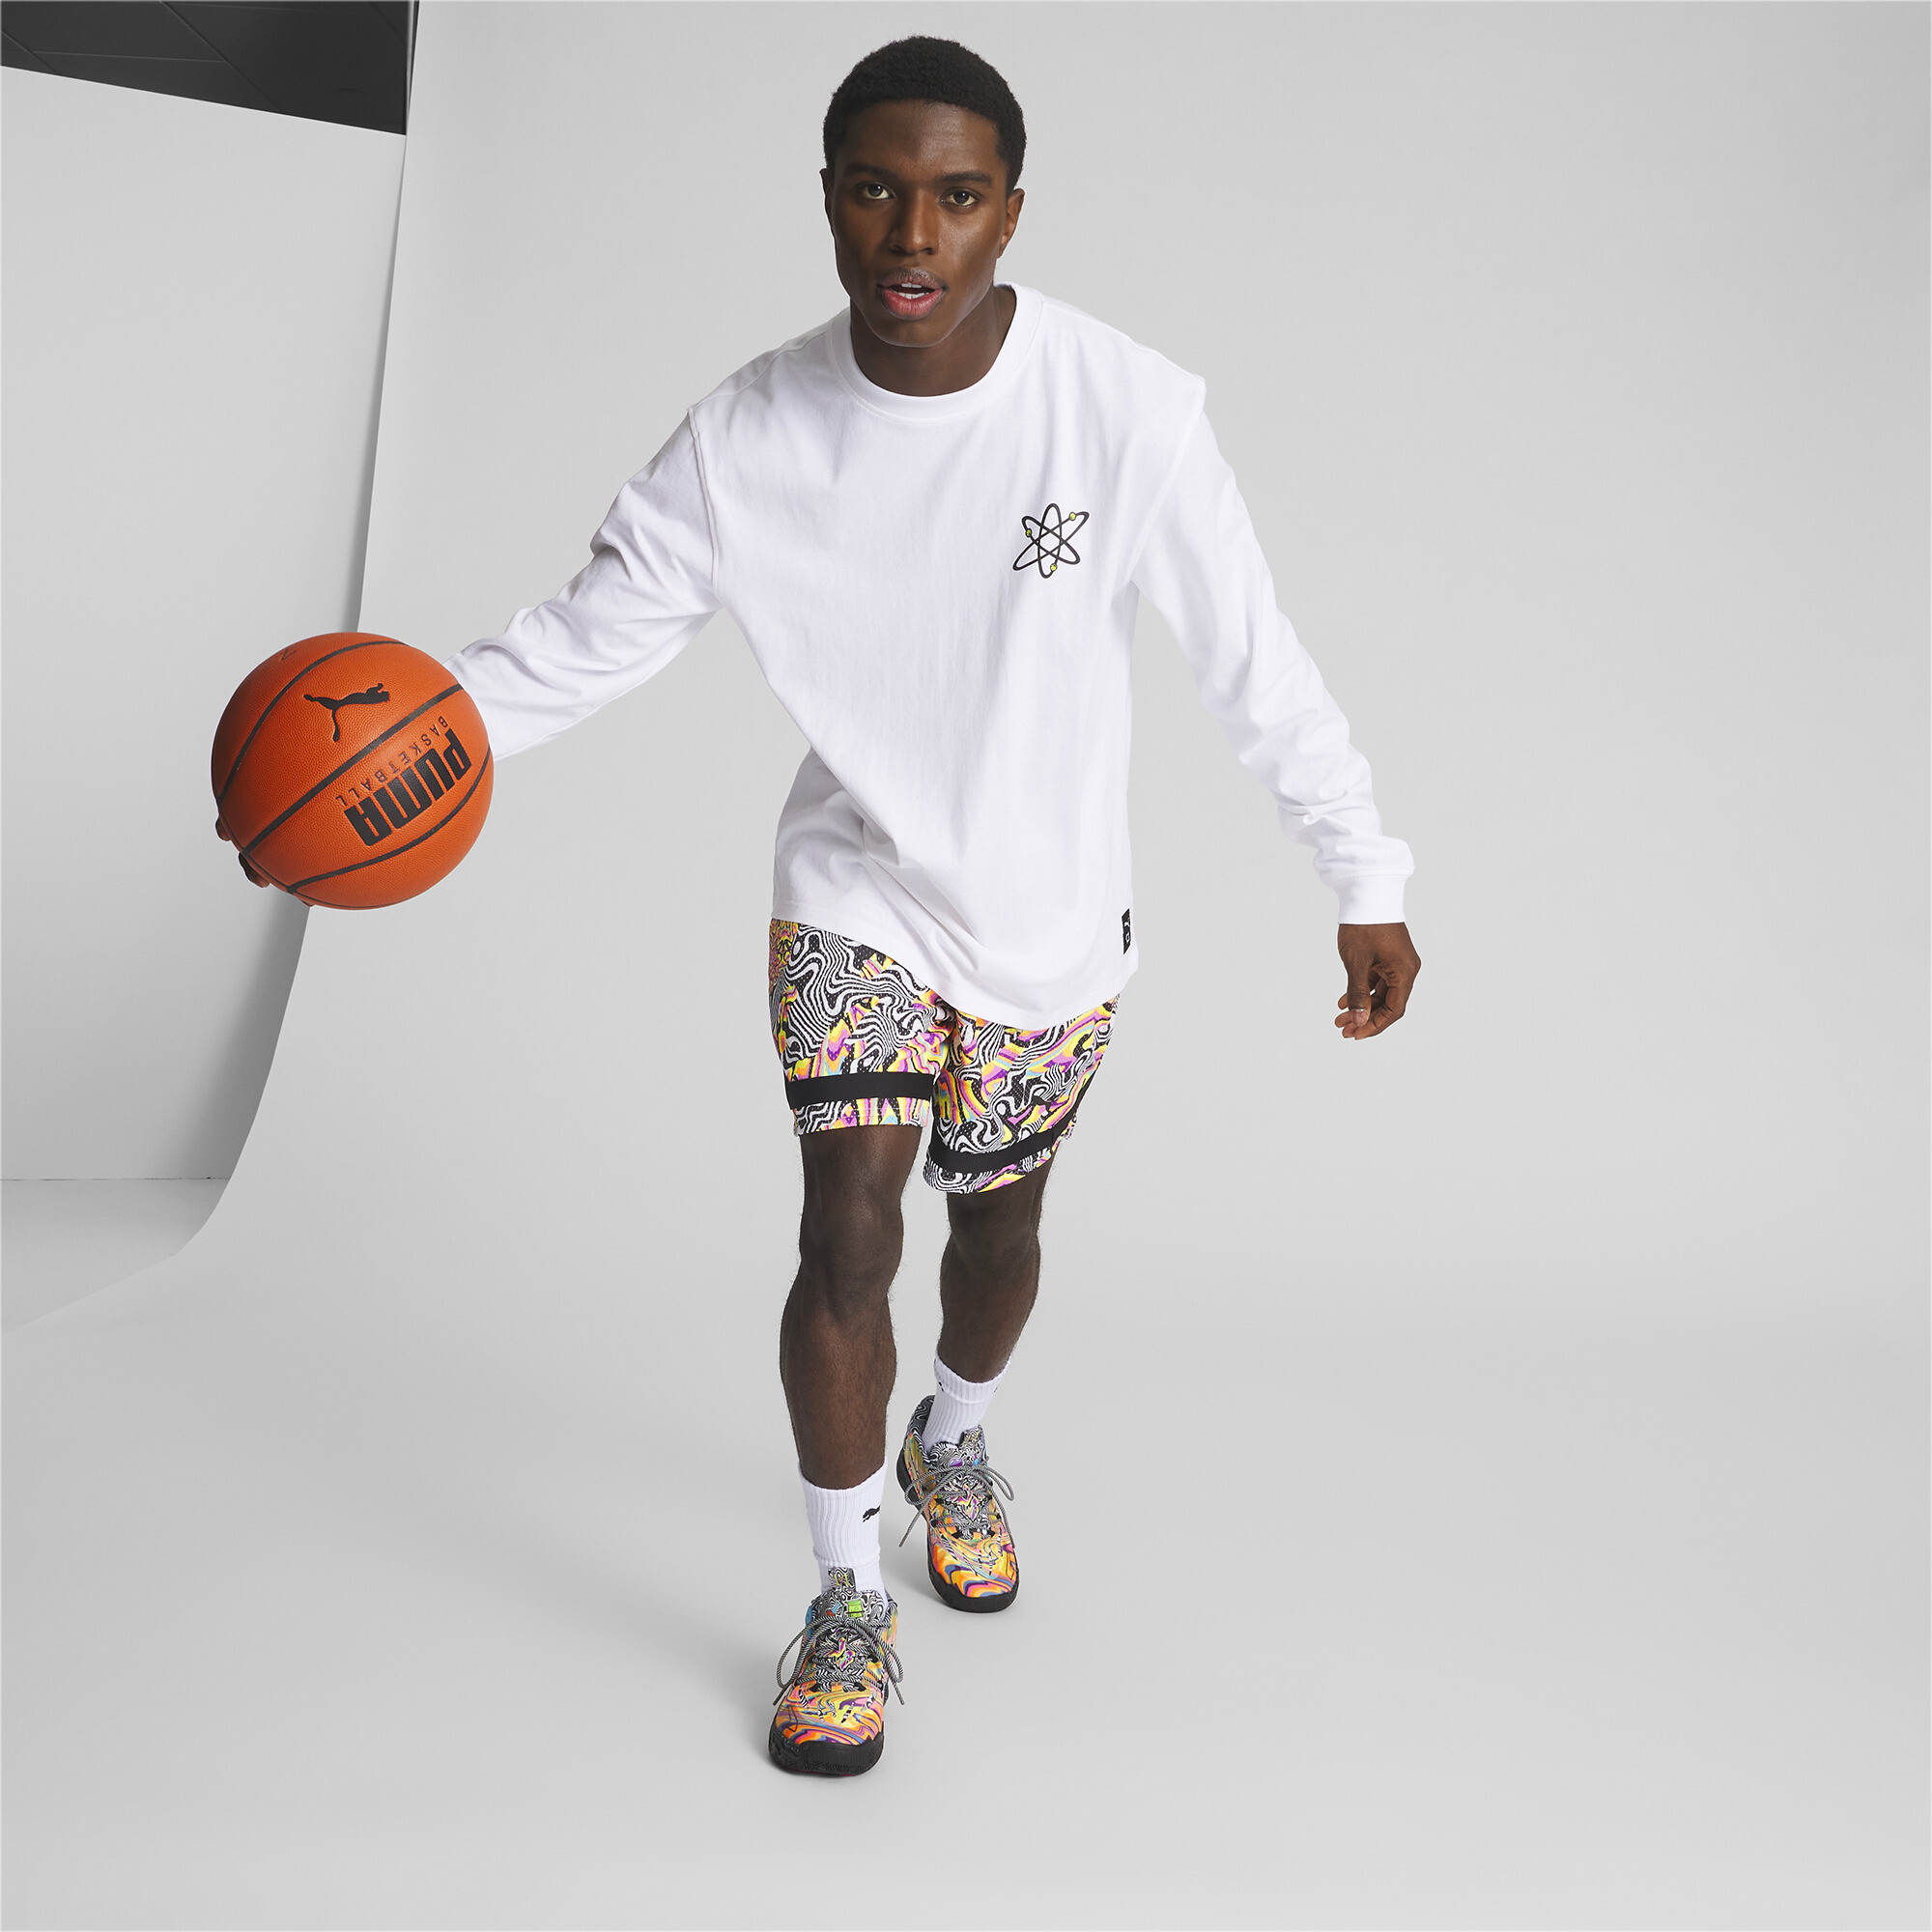 Men's Puma X DEXTER'S LABORATORY's Basketball Shorts, Black, Size L, Clothing